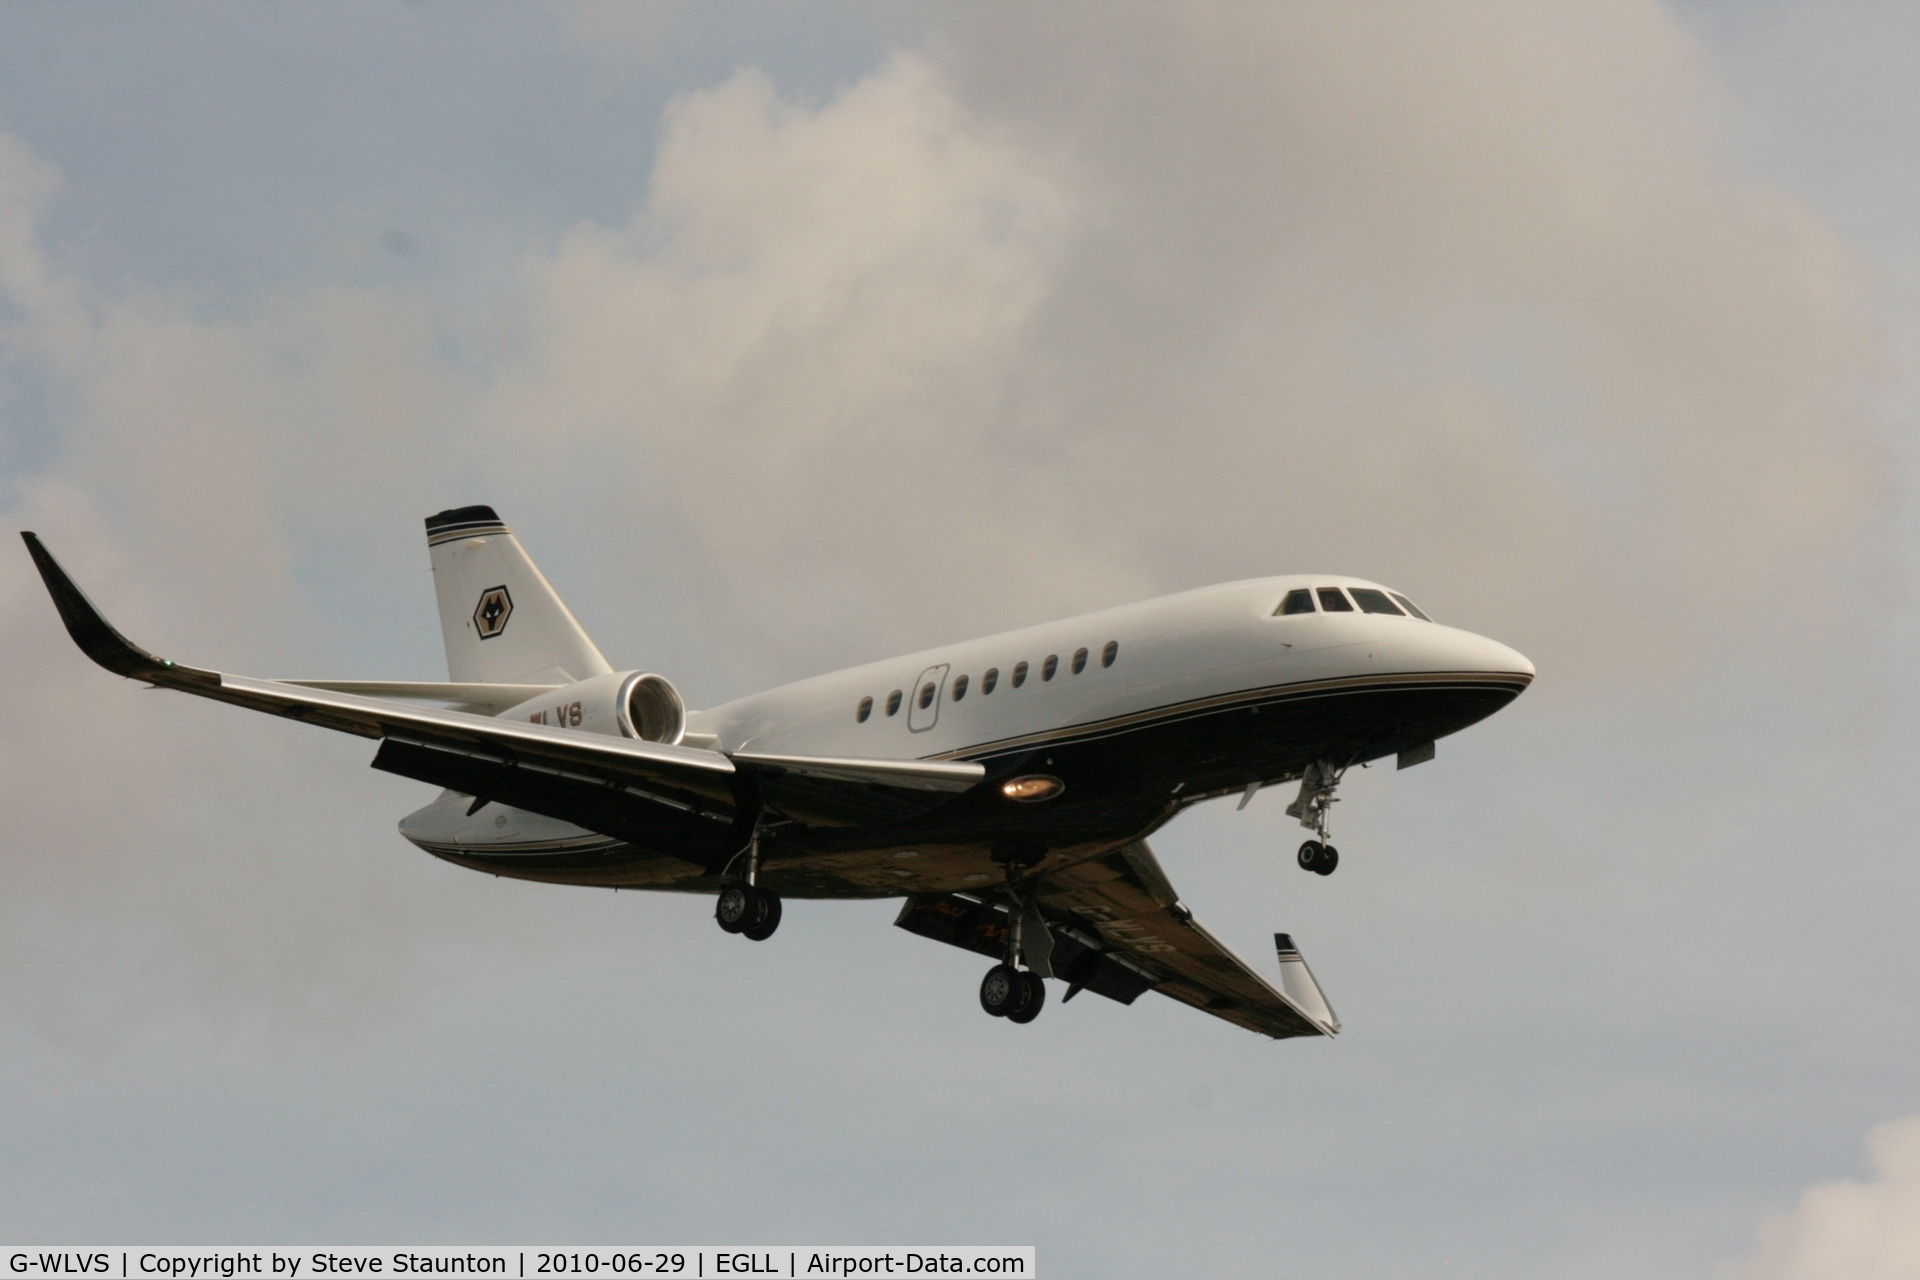 G-WLVS, 2007 Dassault Falcon 2000EX C/N 141, Taken at Heathrow Airport, June 2010